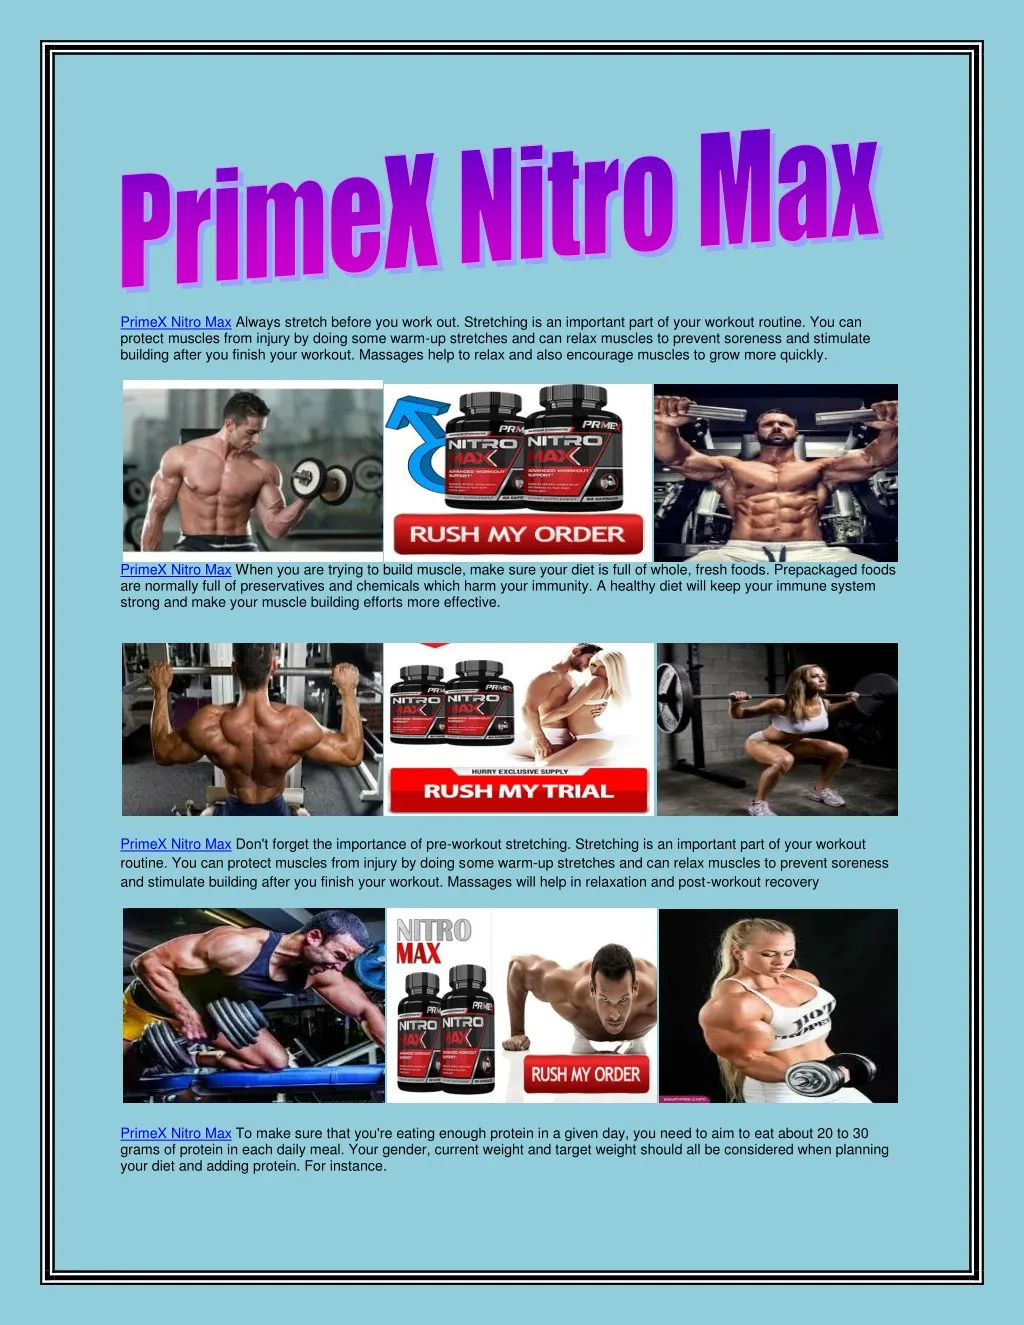 primex nitro max always stretch before you work